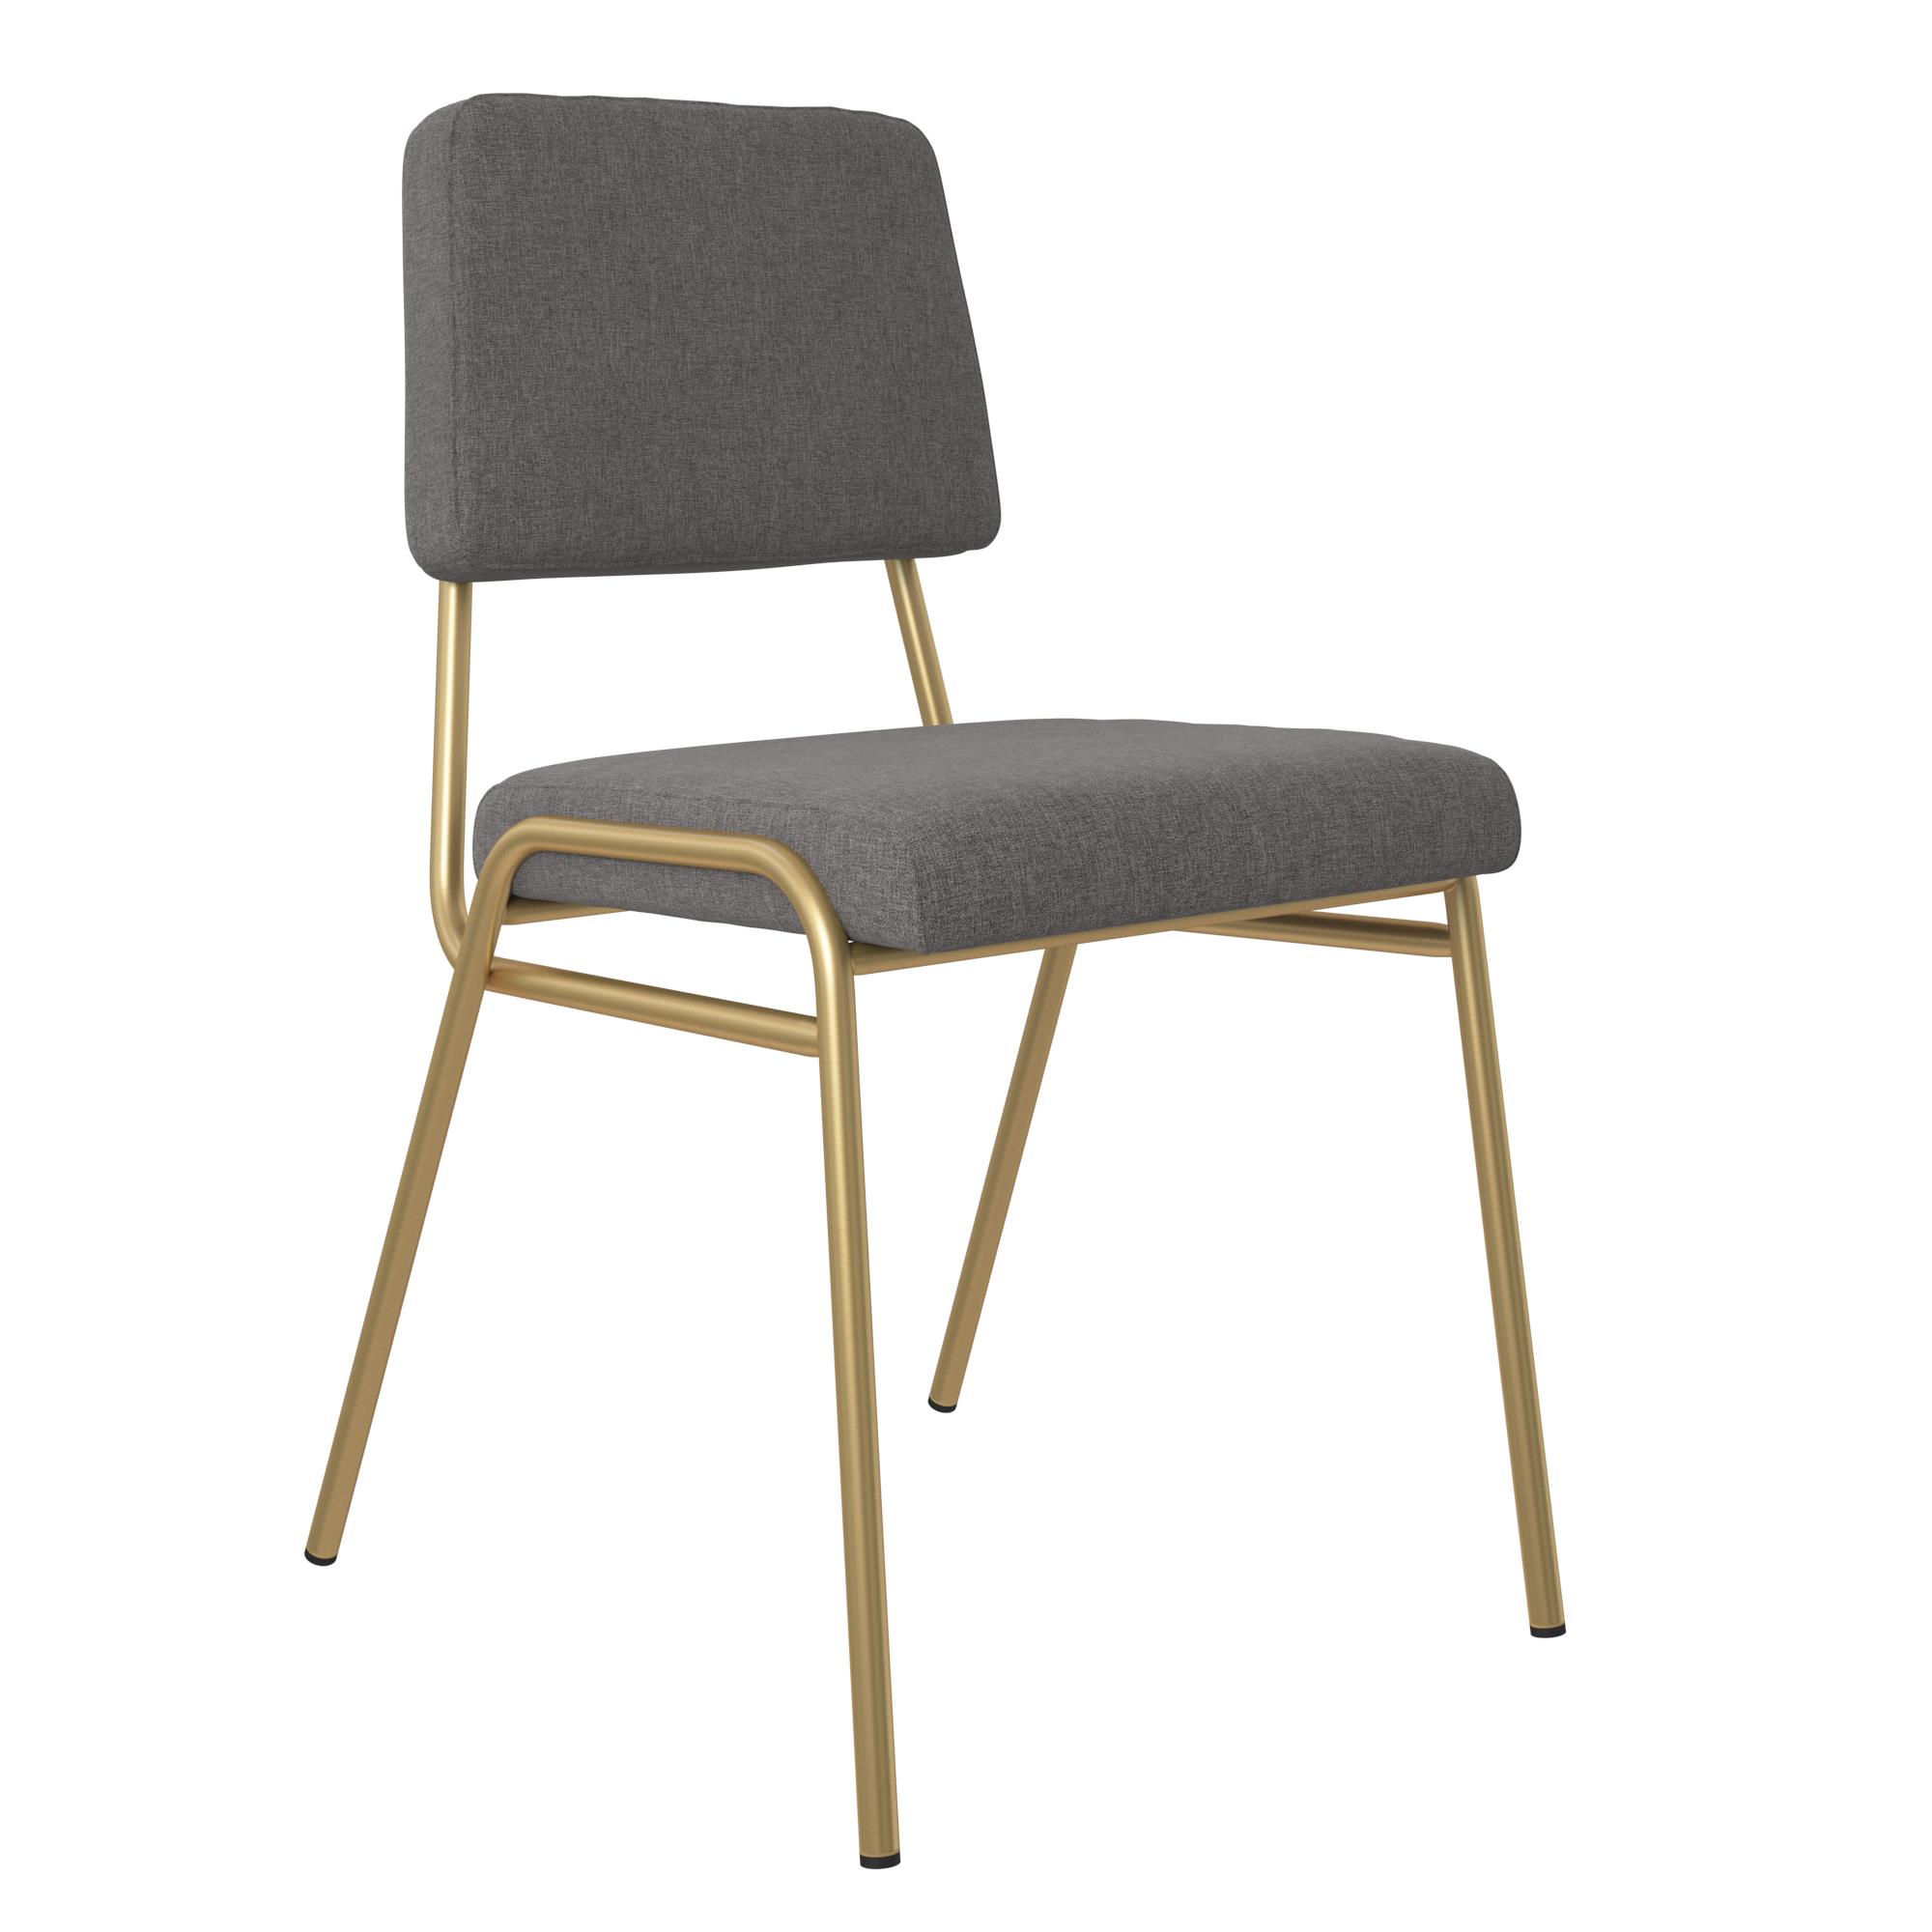 Novogratz Lex Upholstered Dining Chair, Gold Frame & Light Grey Linen Upholstery - image 5 of 14